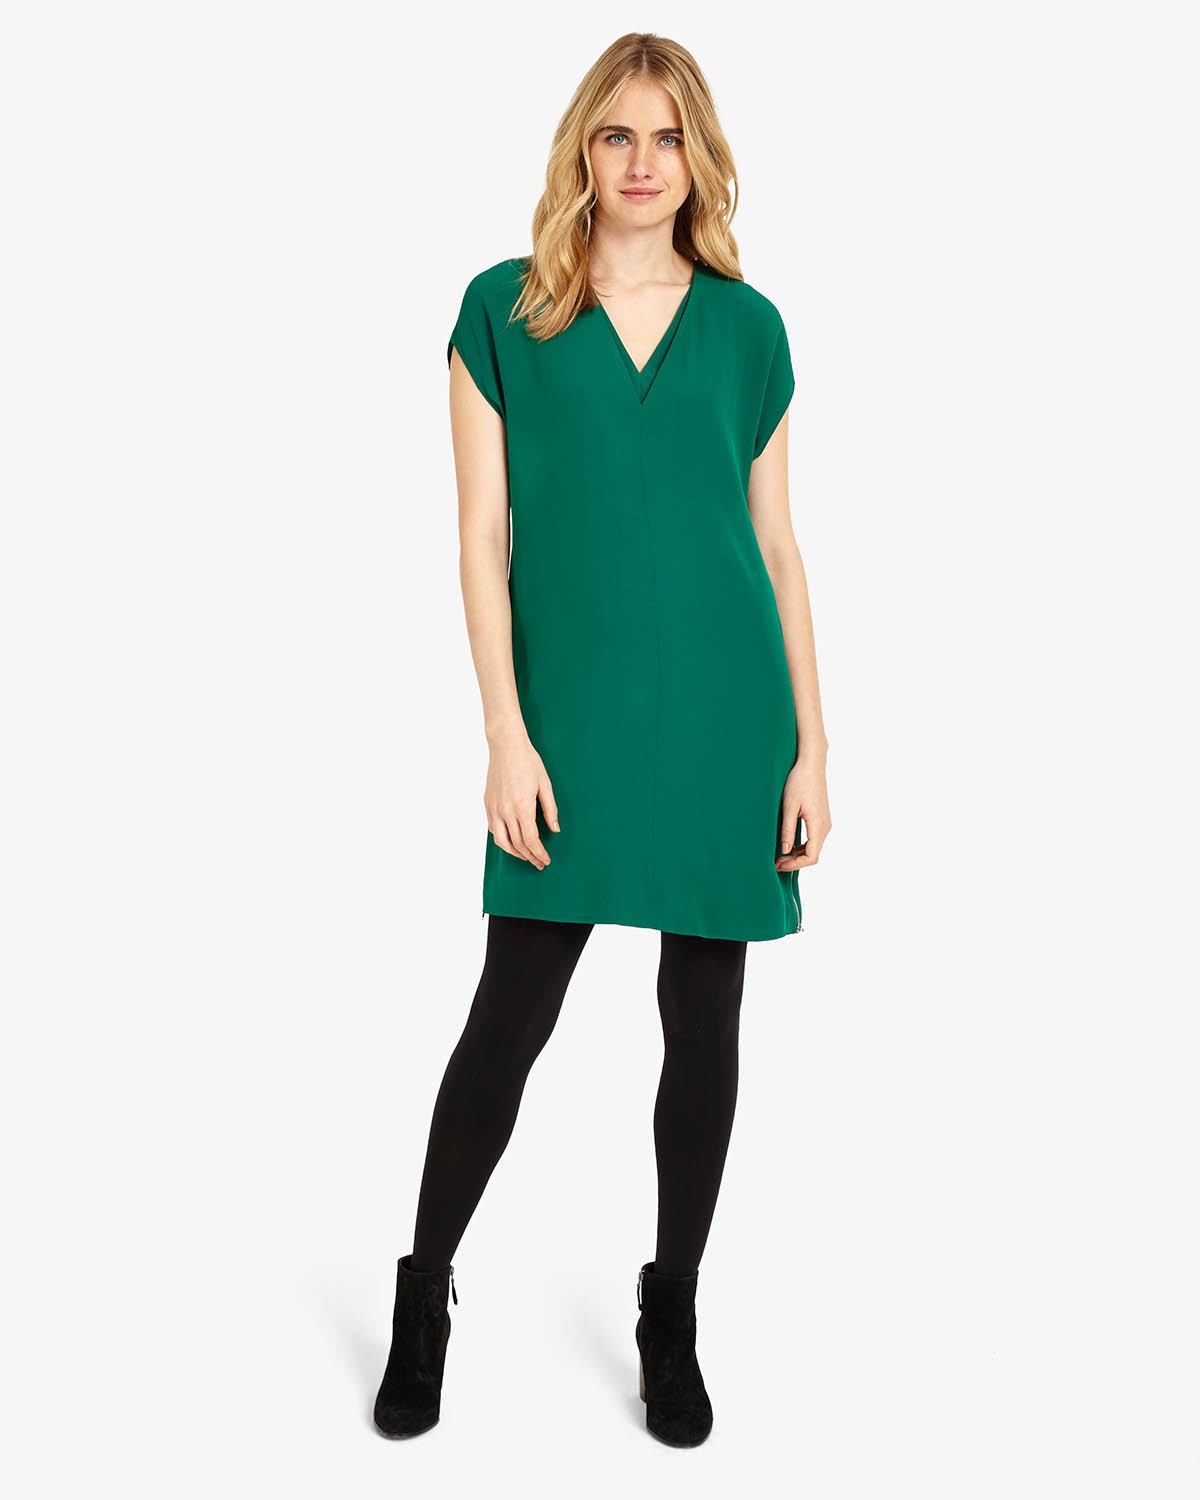 phase eight long green dress